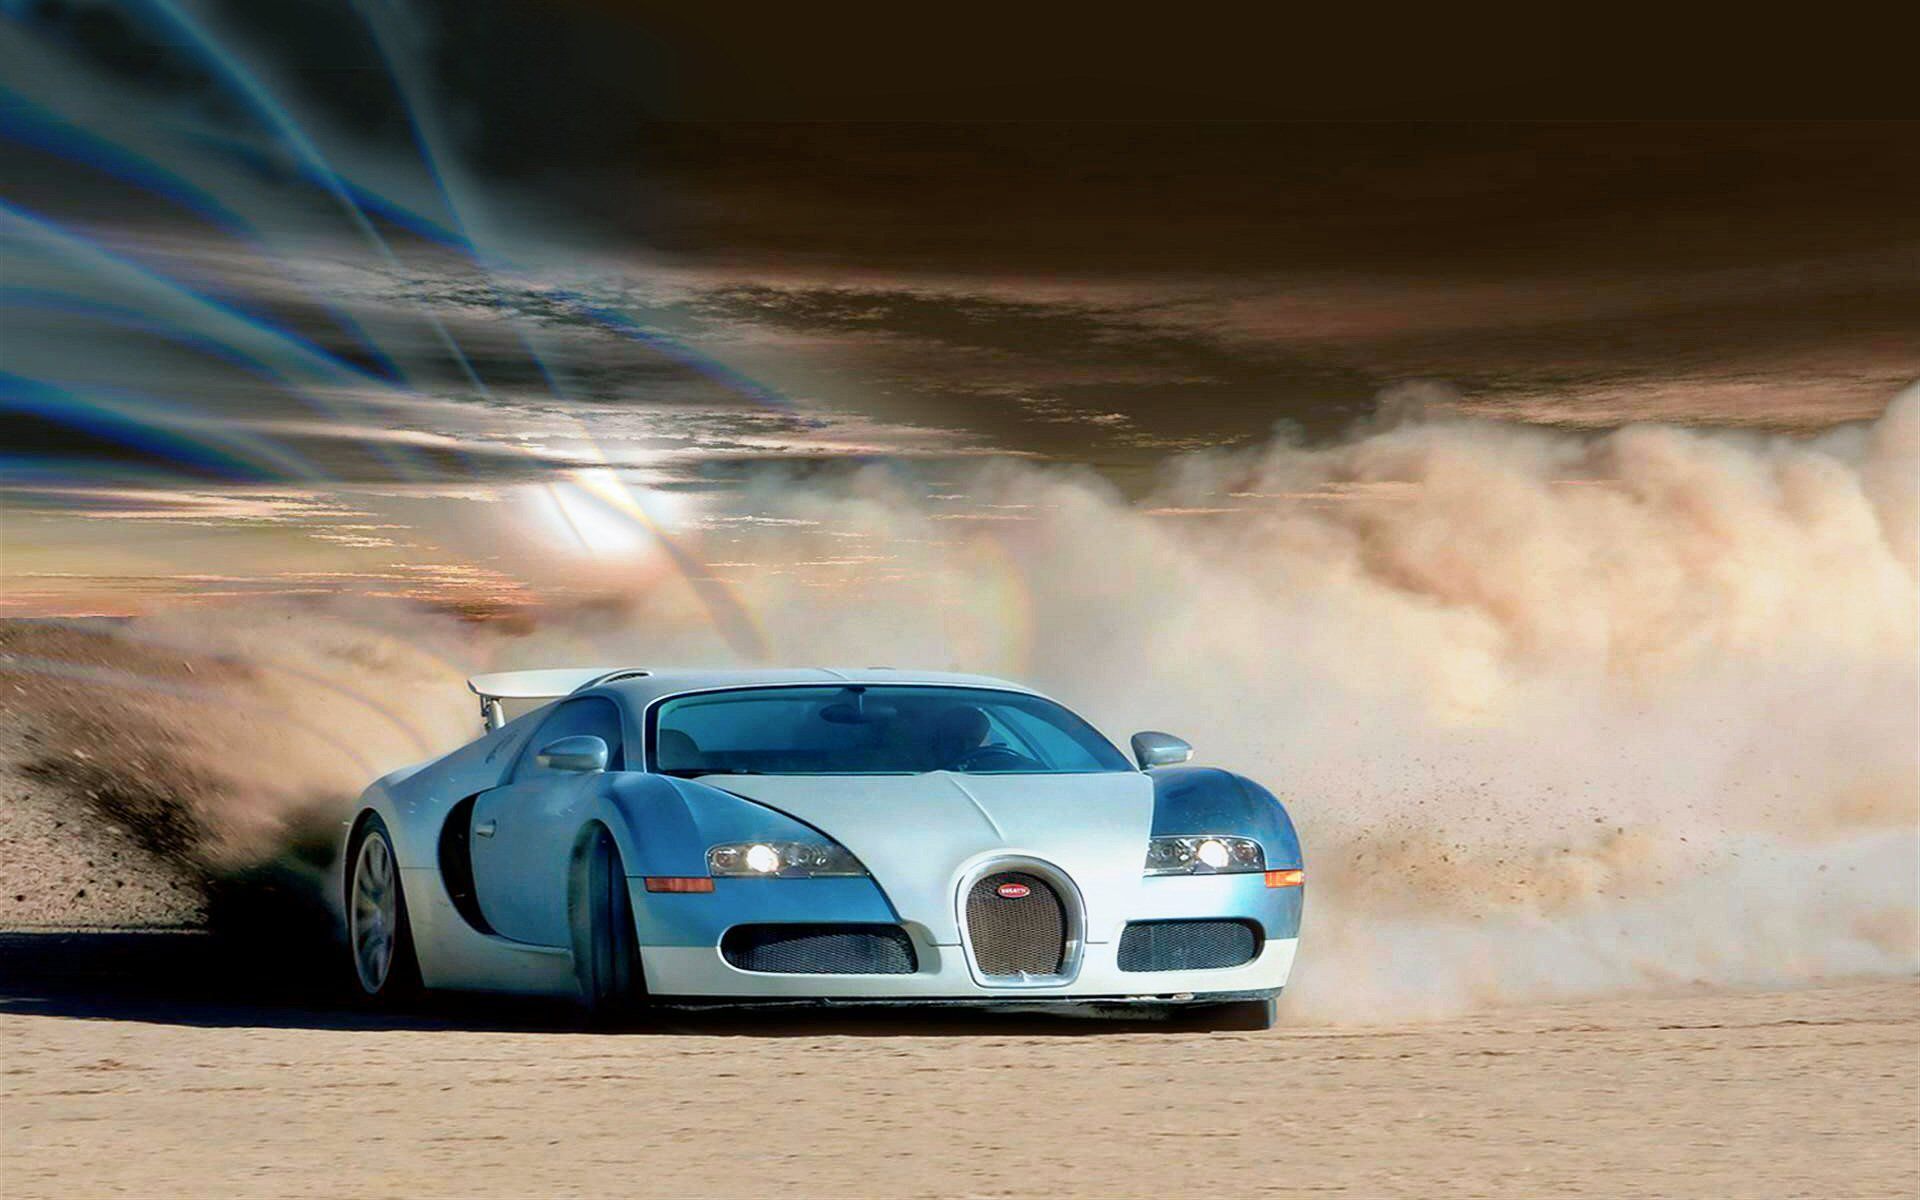 195 Bugatti Veyron HD Wallpapers | Backgrounds - Wallpaper Abyss